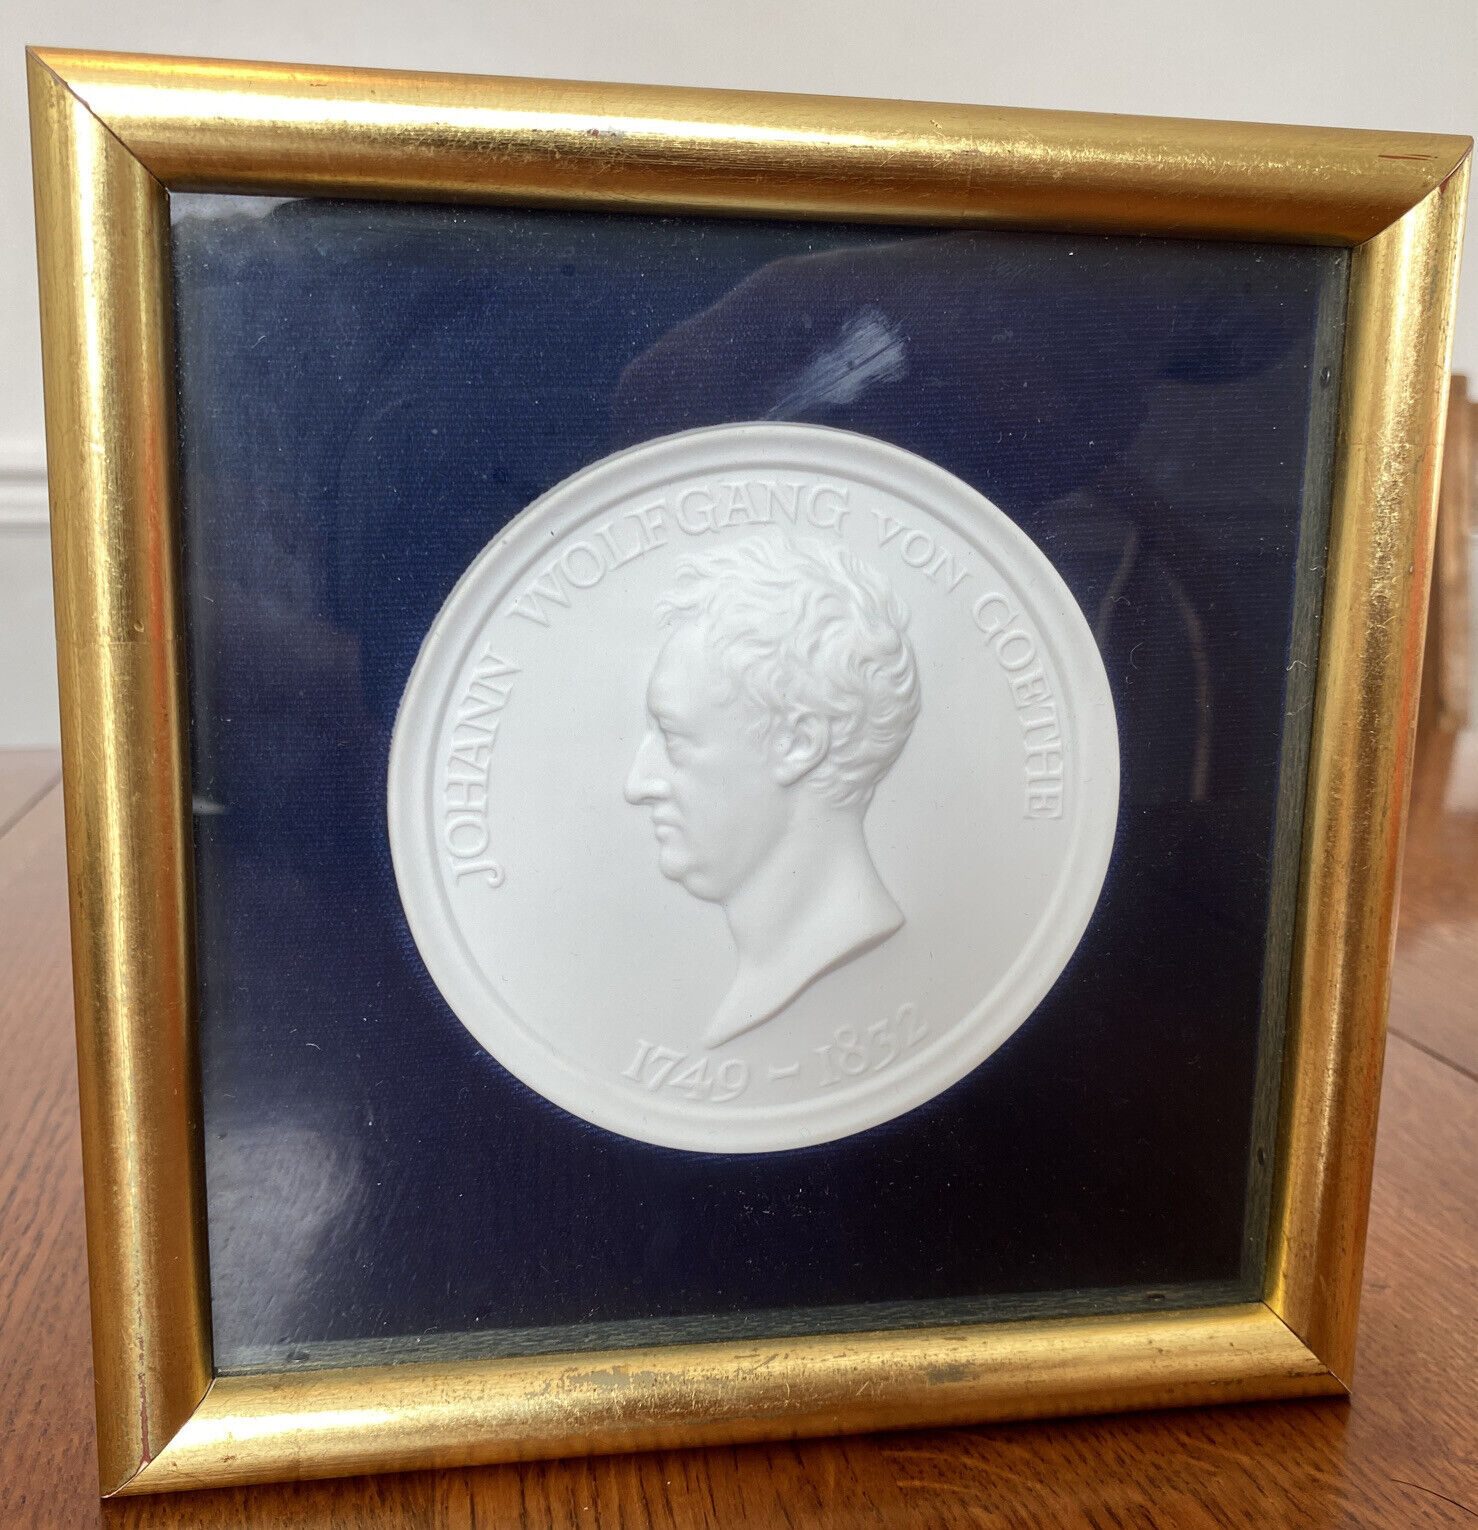 Antique porcelain Johann Wolfgang von Goethe Medallion plaque framed￼